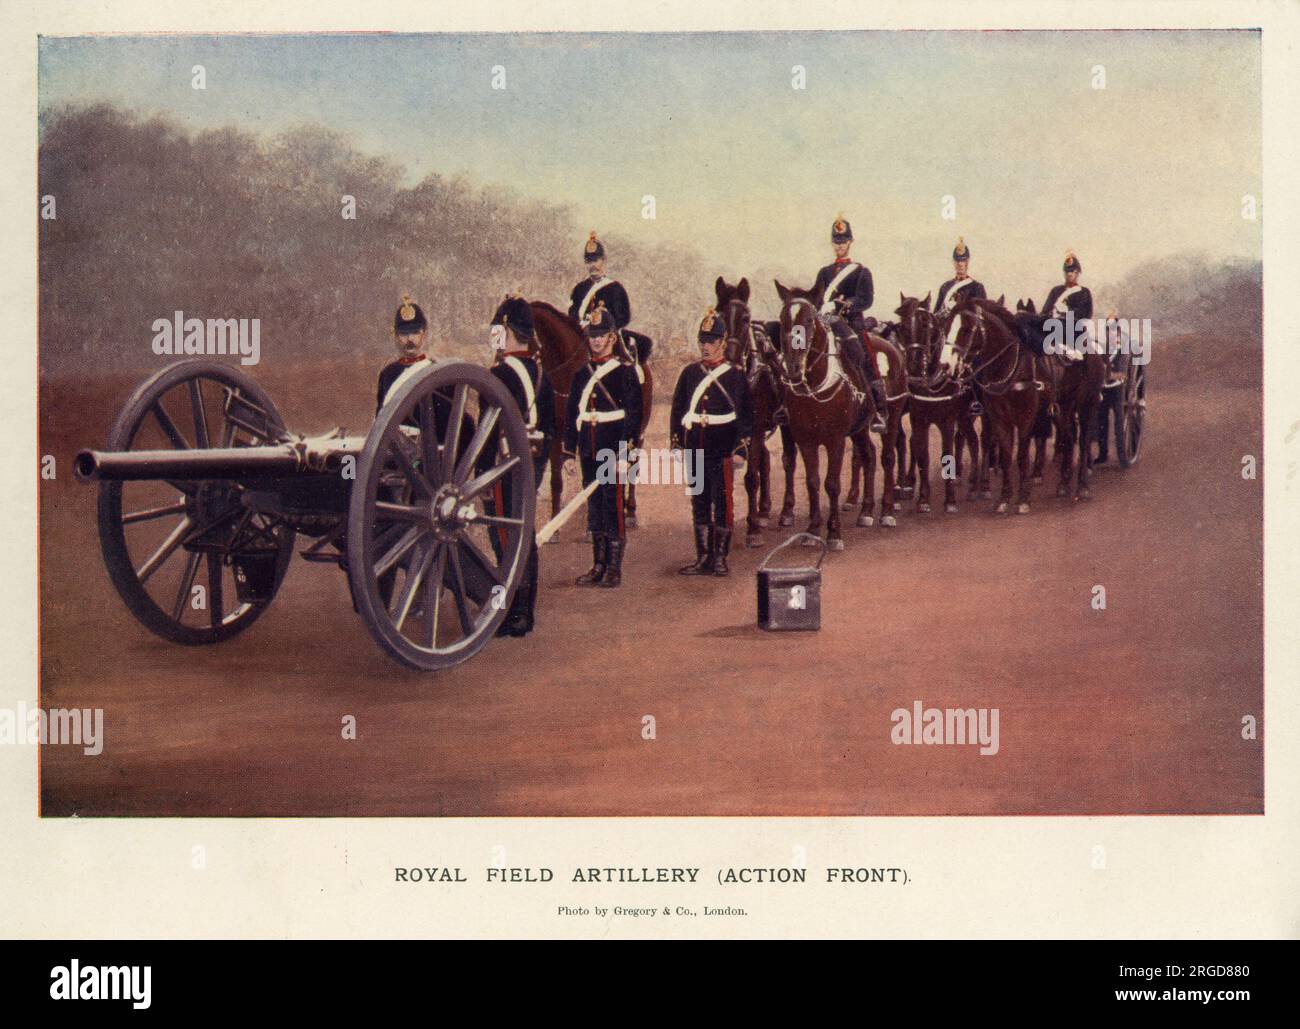 Royal Field Artillery, Frente de Acción con Pistola Foto de stock